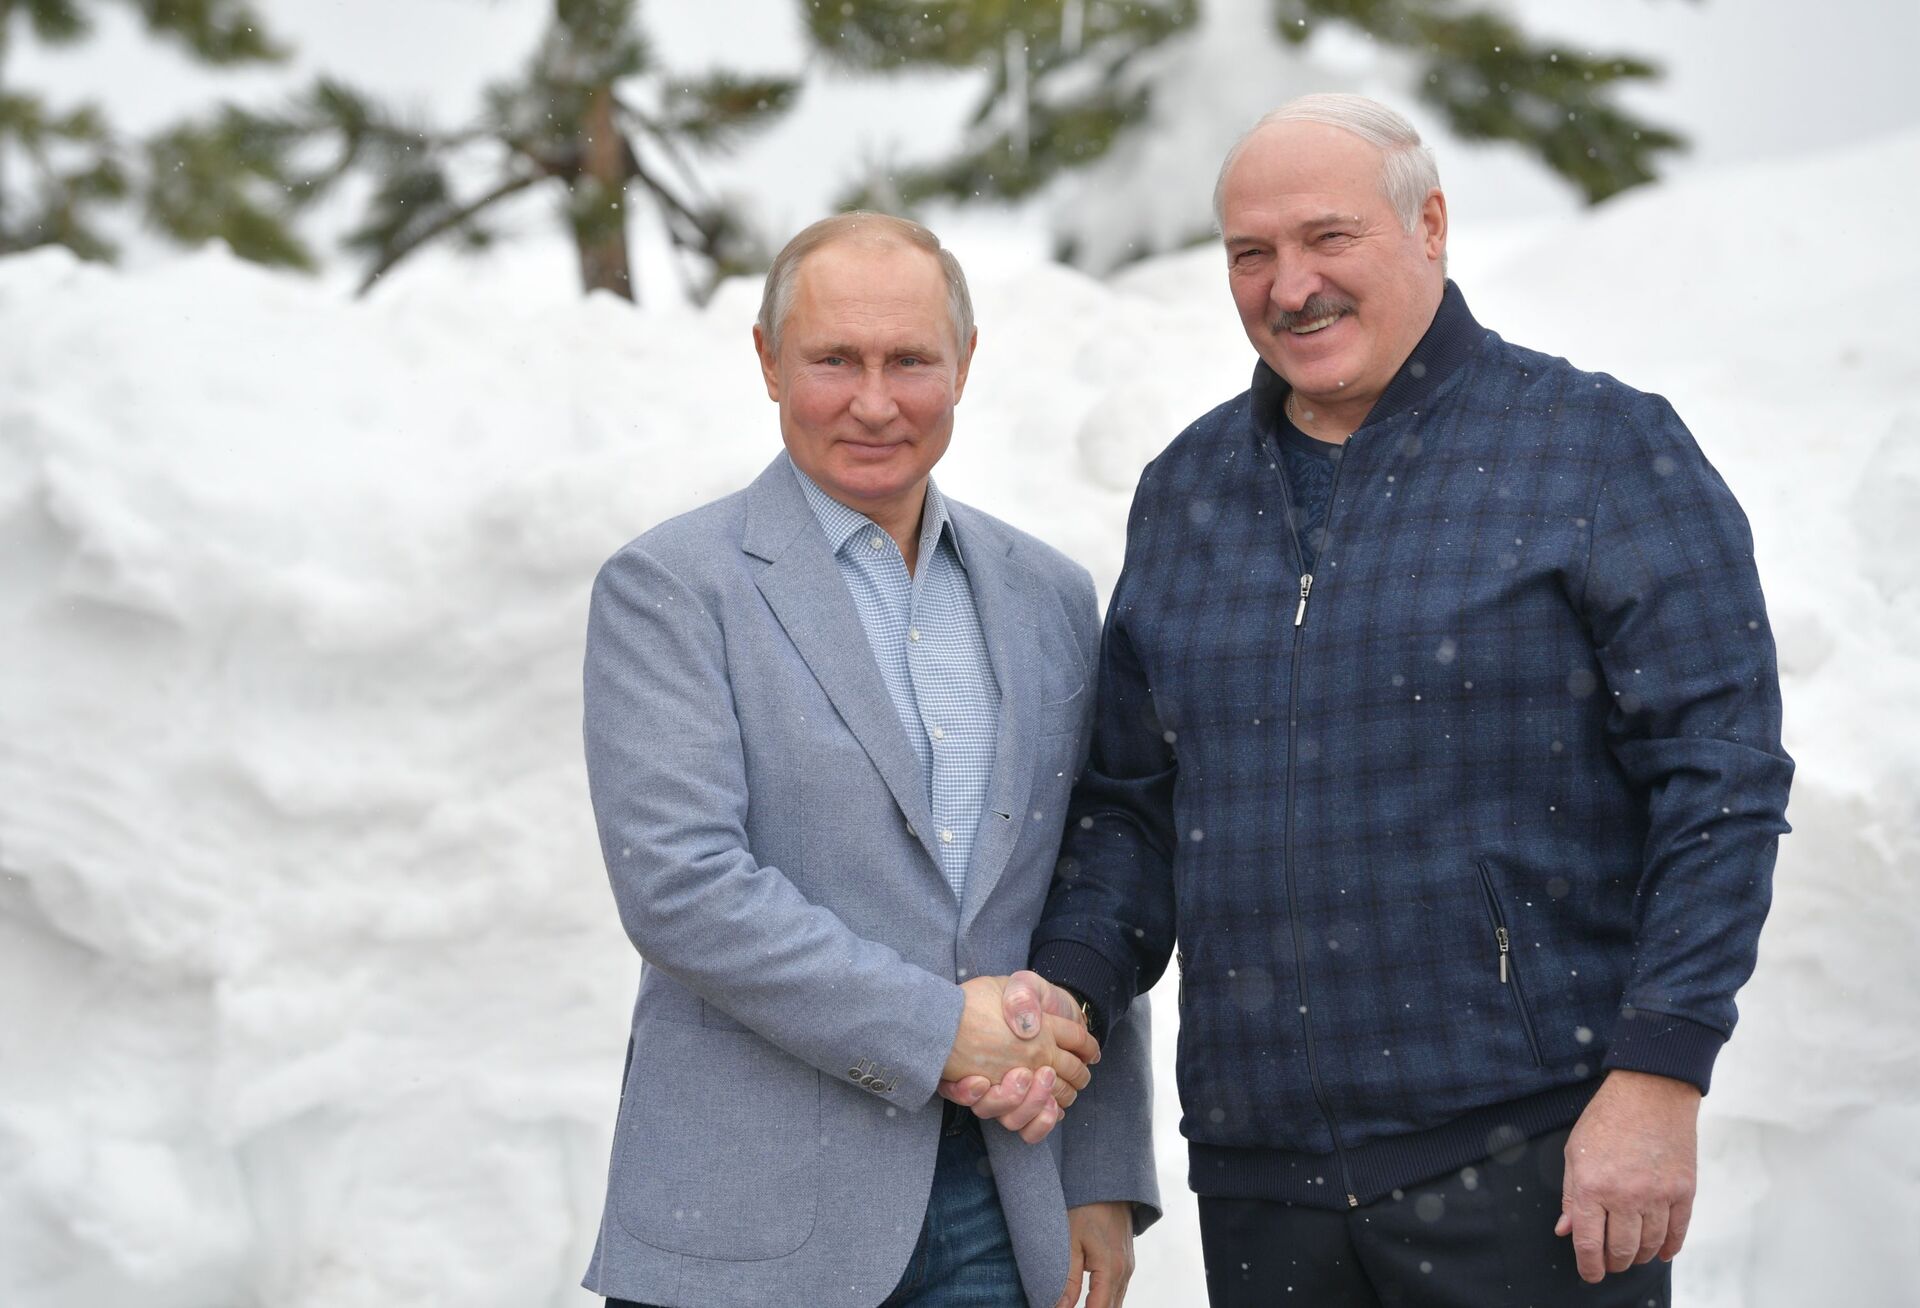 Presidente russo Vladimir Putin cumprimenta seu homólogo bielorrusso Aleksandr Lukashenko durante encontro em Sochi, Rússia - Sputnik Brasil, 1920, 09.11.2021